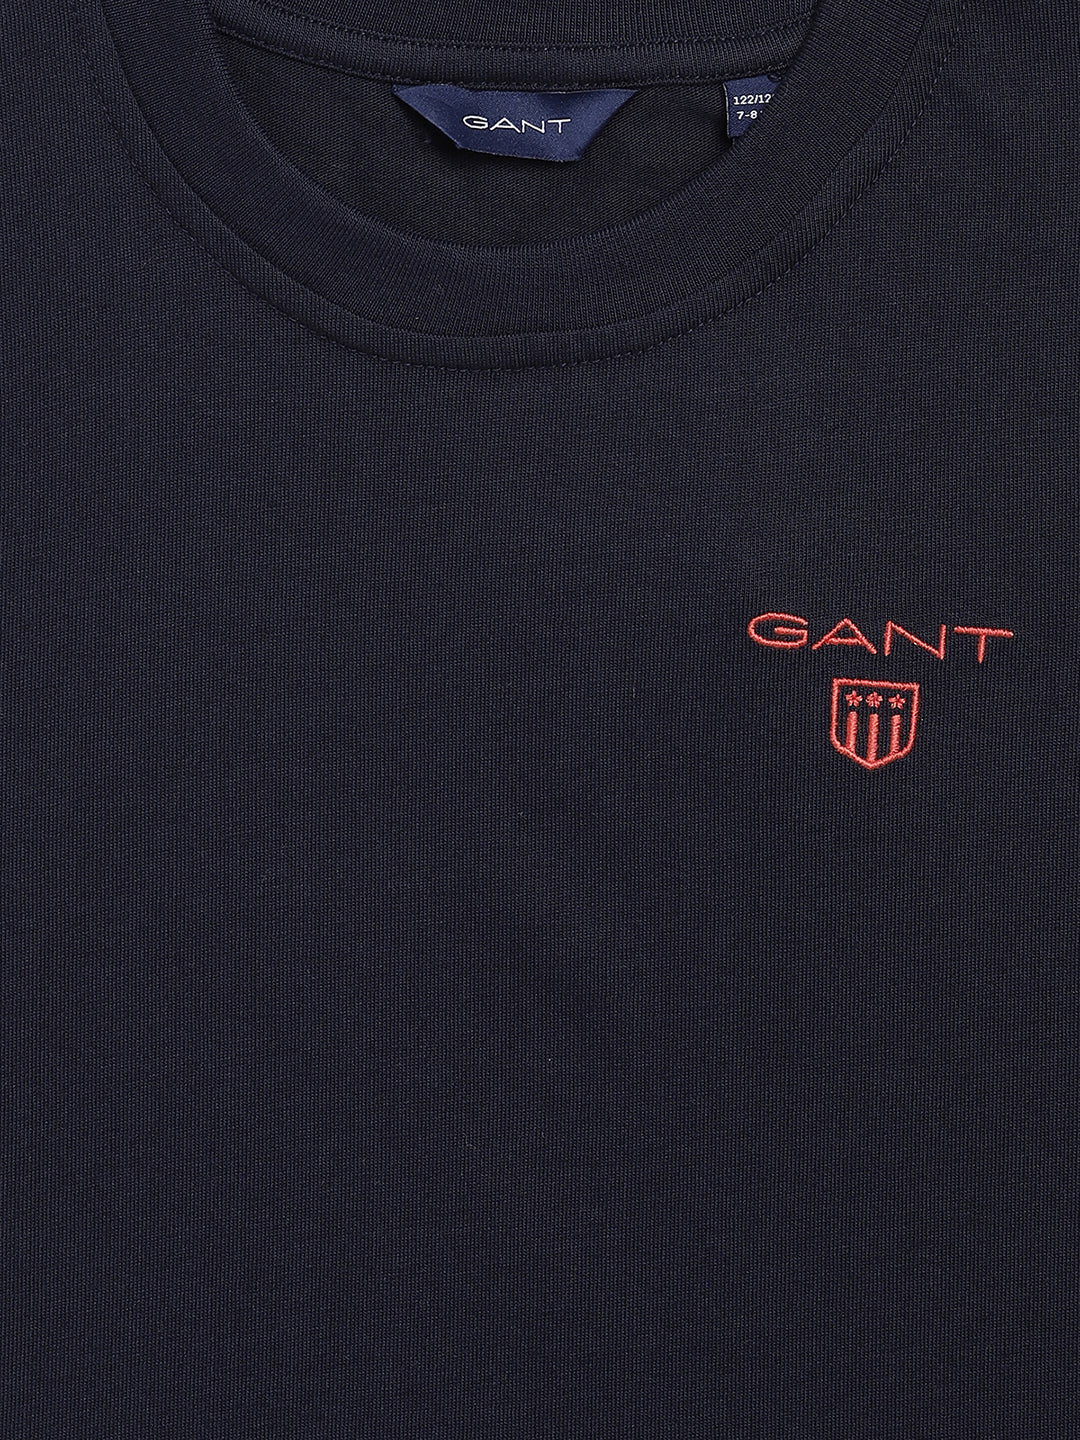 Gant Boys Navy Blue Solid Cotton T-shirt